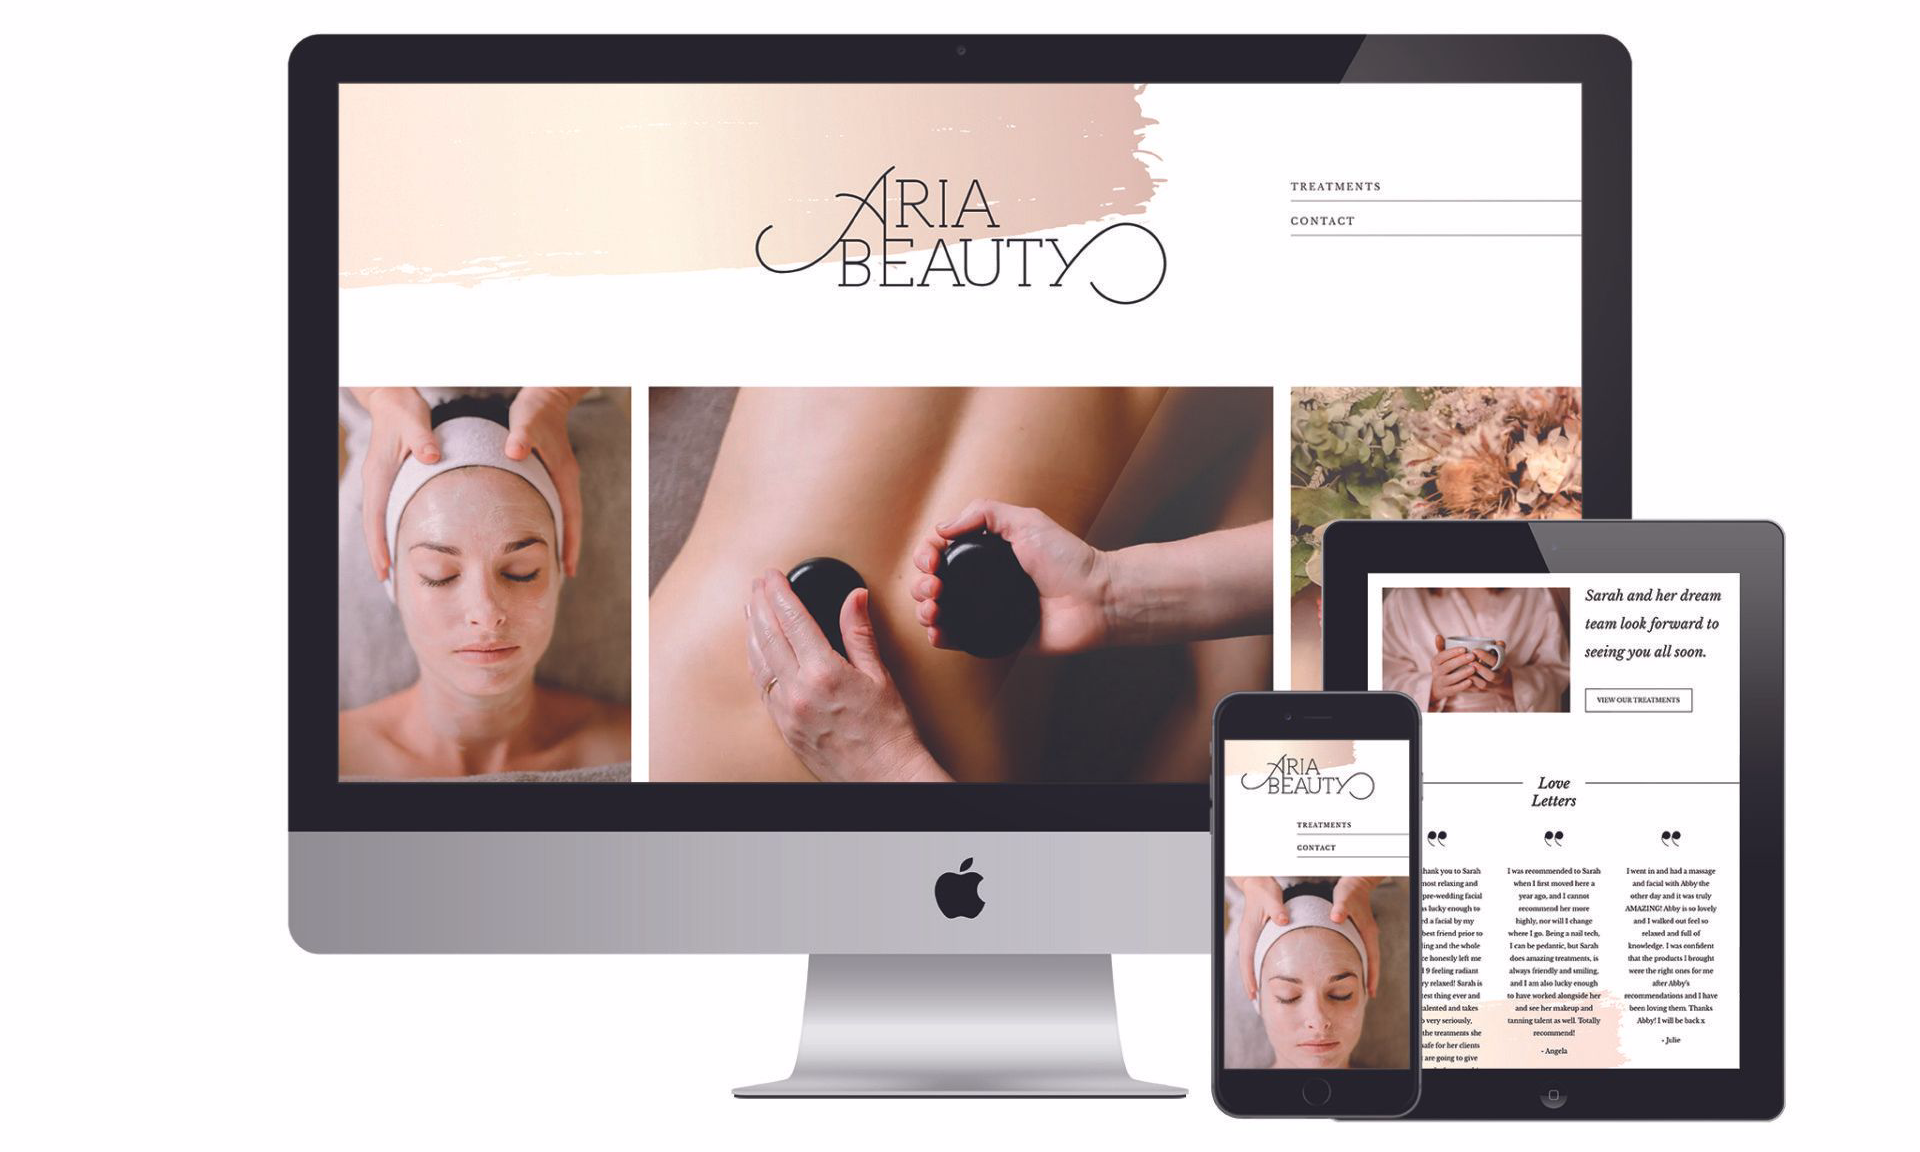 Aria Beauty website designed by Vanilla Hayes creative graphic design  studio in Blenheim, Marlborough, New Zealand